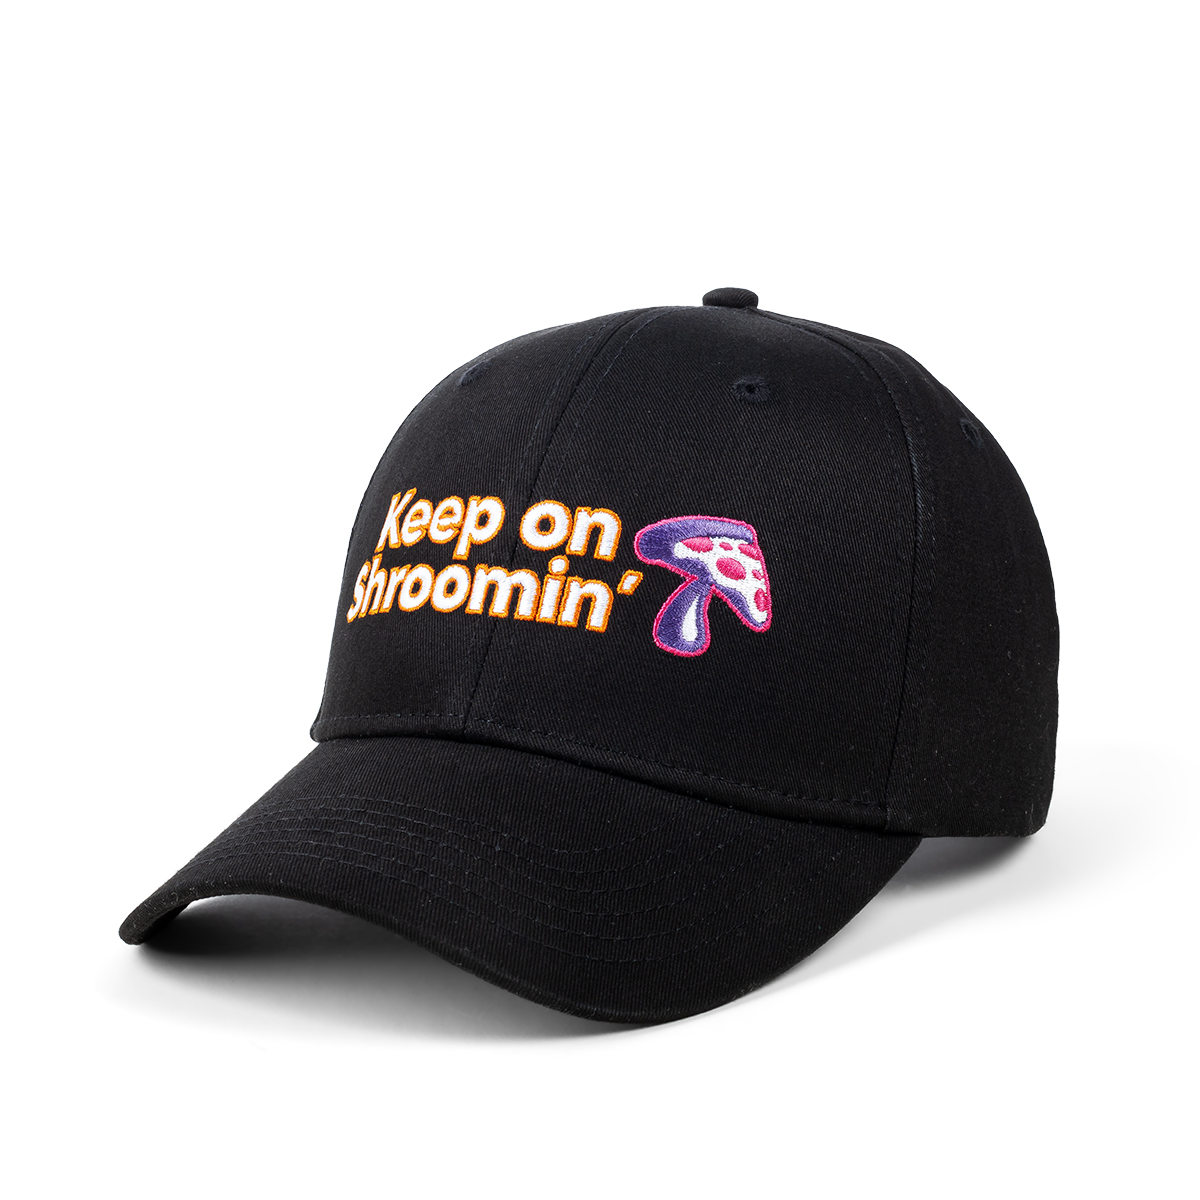 Shroomin Hat